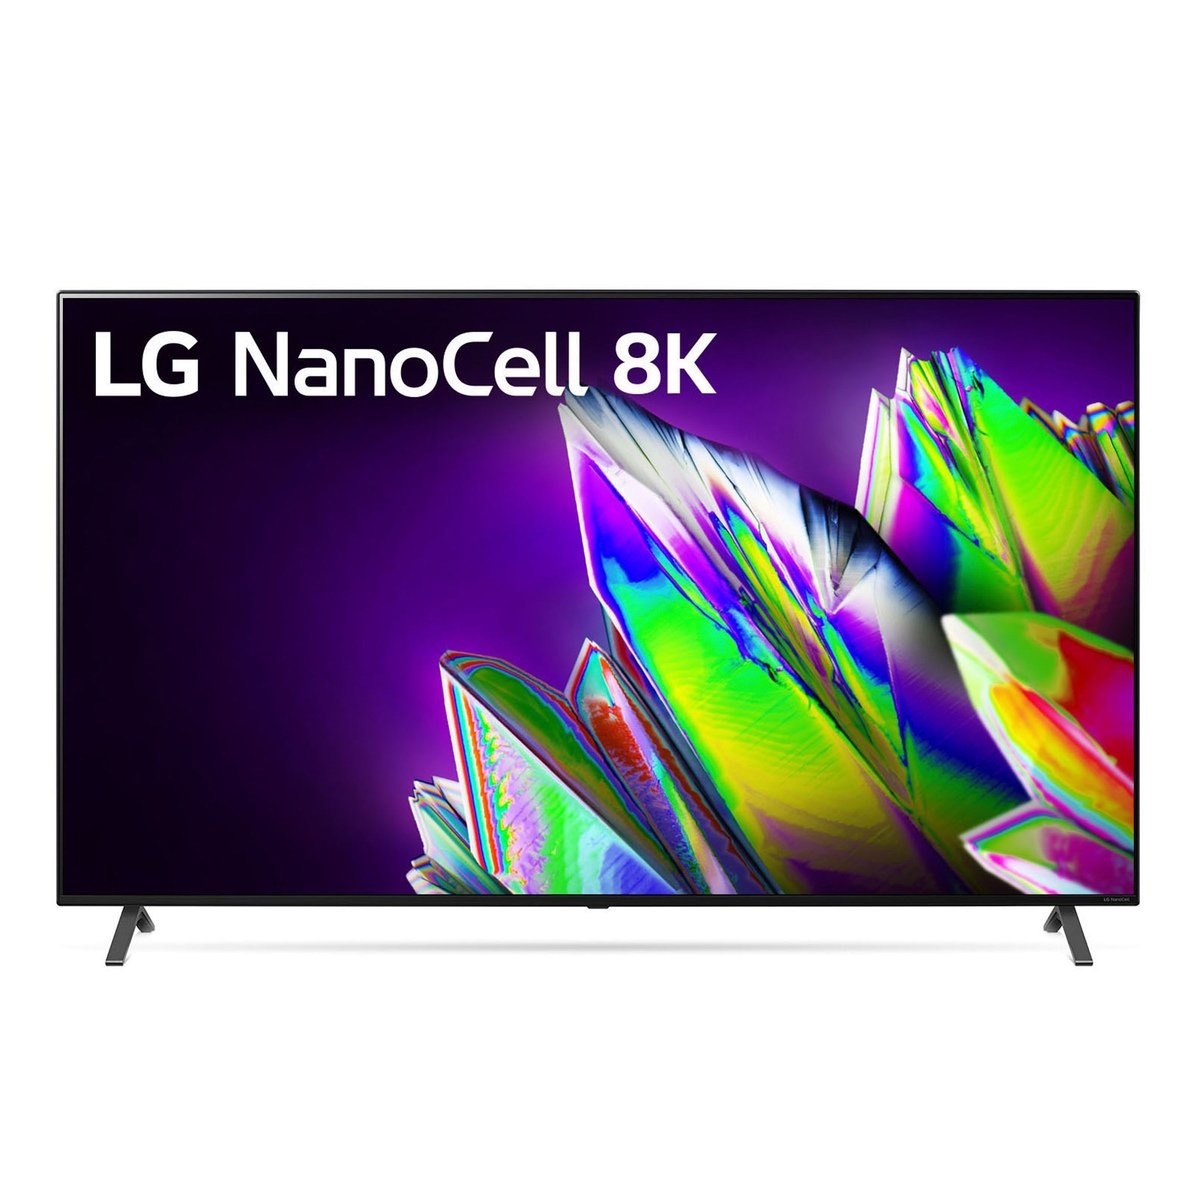 LG NanoCell TV 75 Inch NANO97 Series, Cinema Screen Design 8K Cinema HDR WebOS Smart ThinQ AI Full Array Dimming